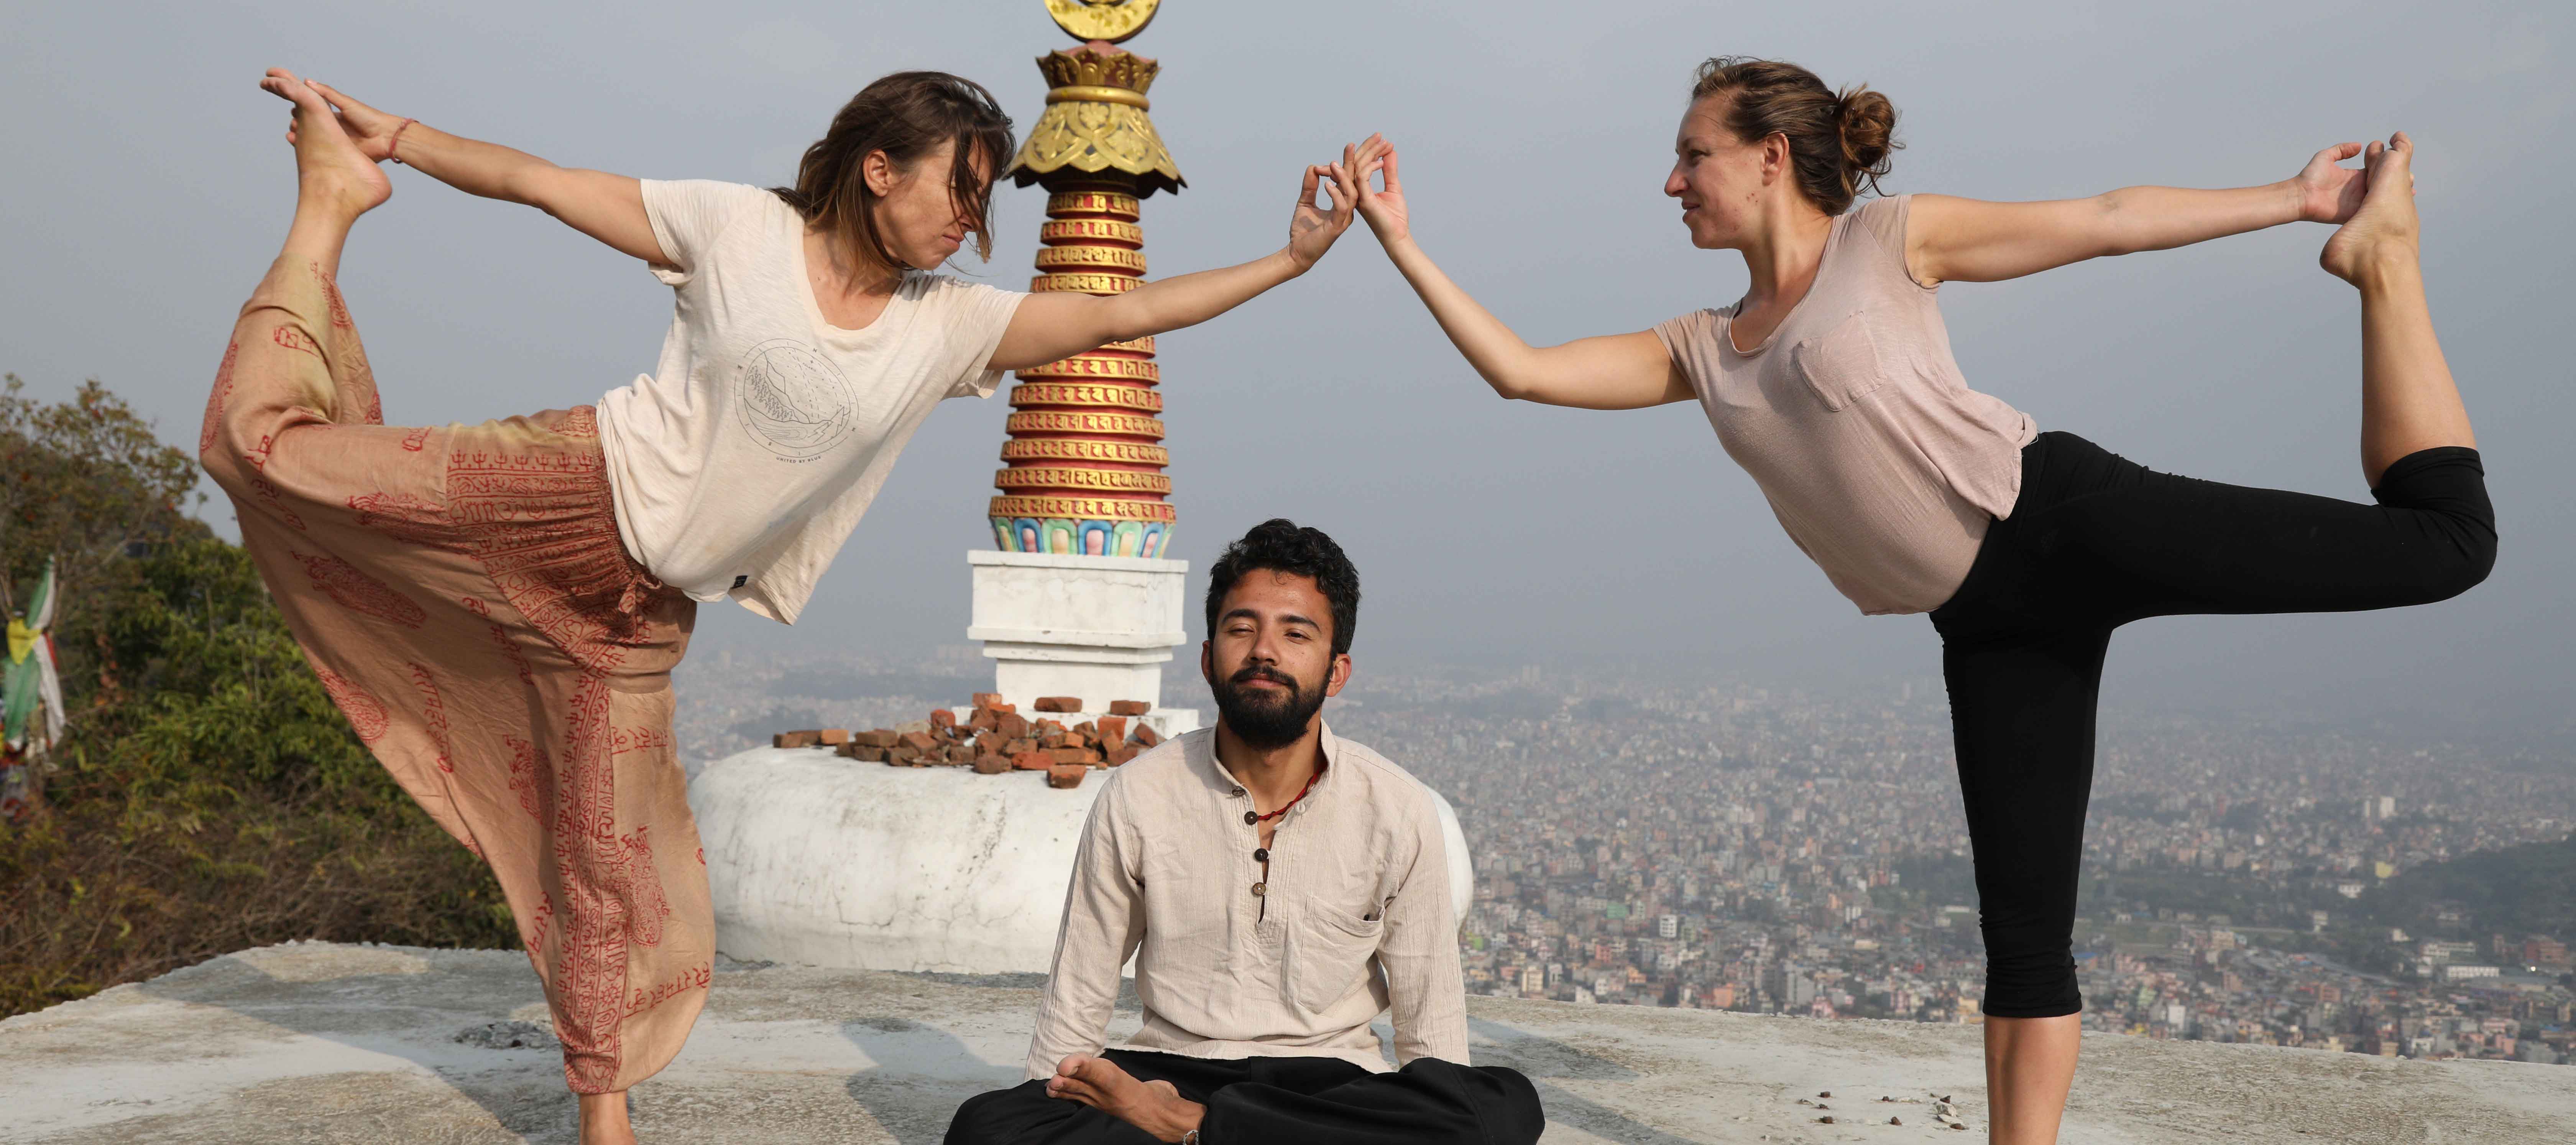 Yoga Retreats in Nepal